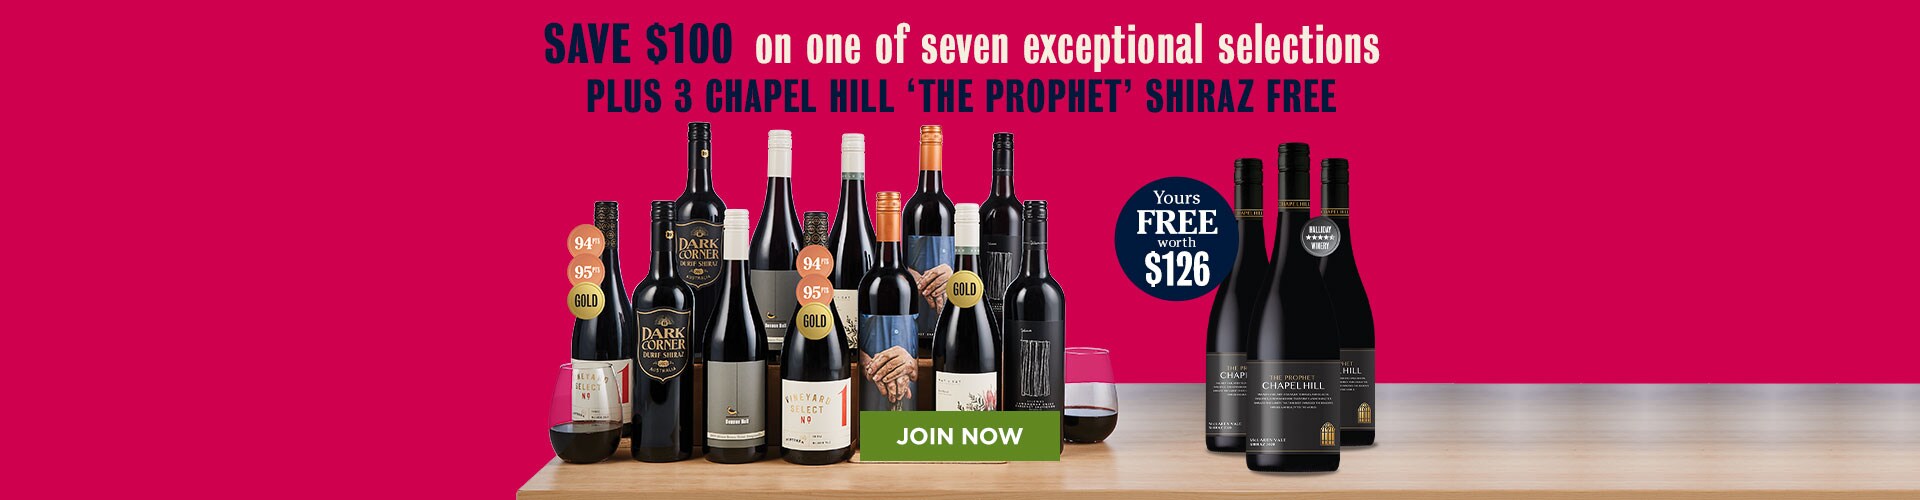 3 Free Chapel Hill The Prophet Shiraz - Save $100